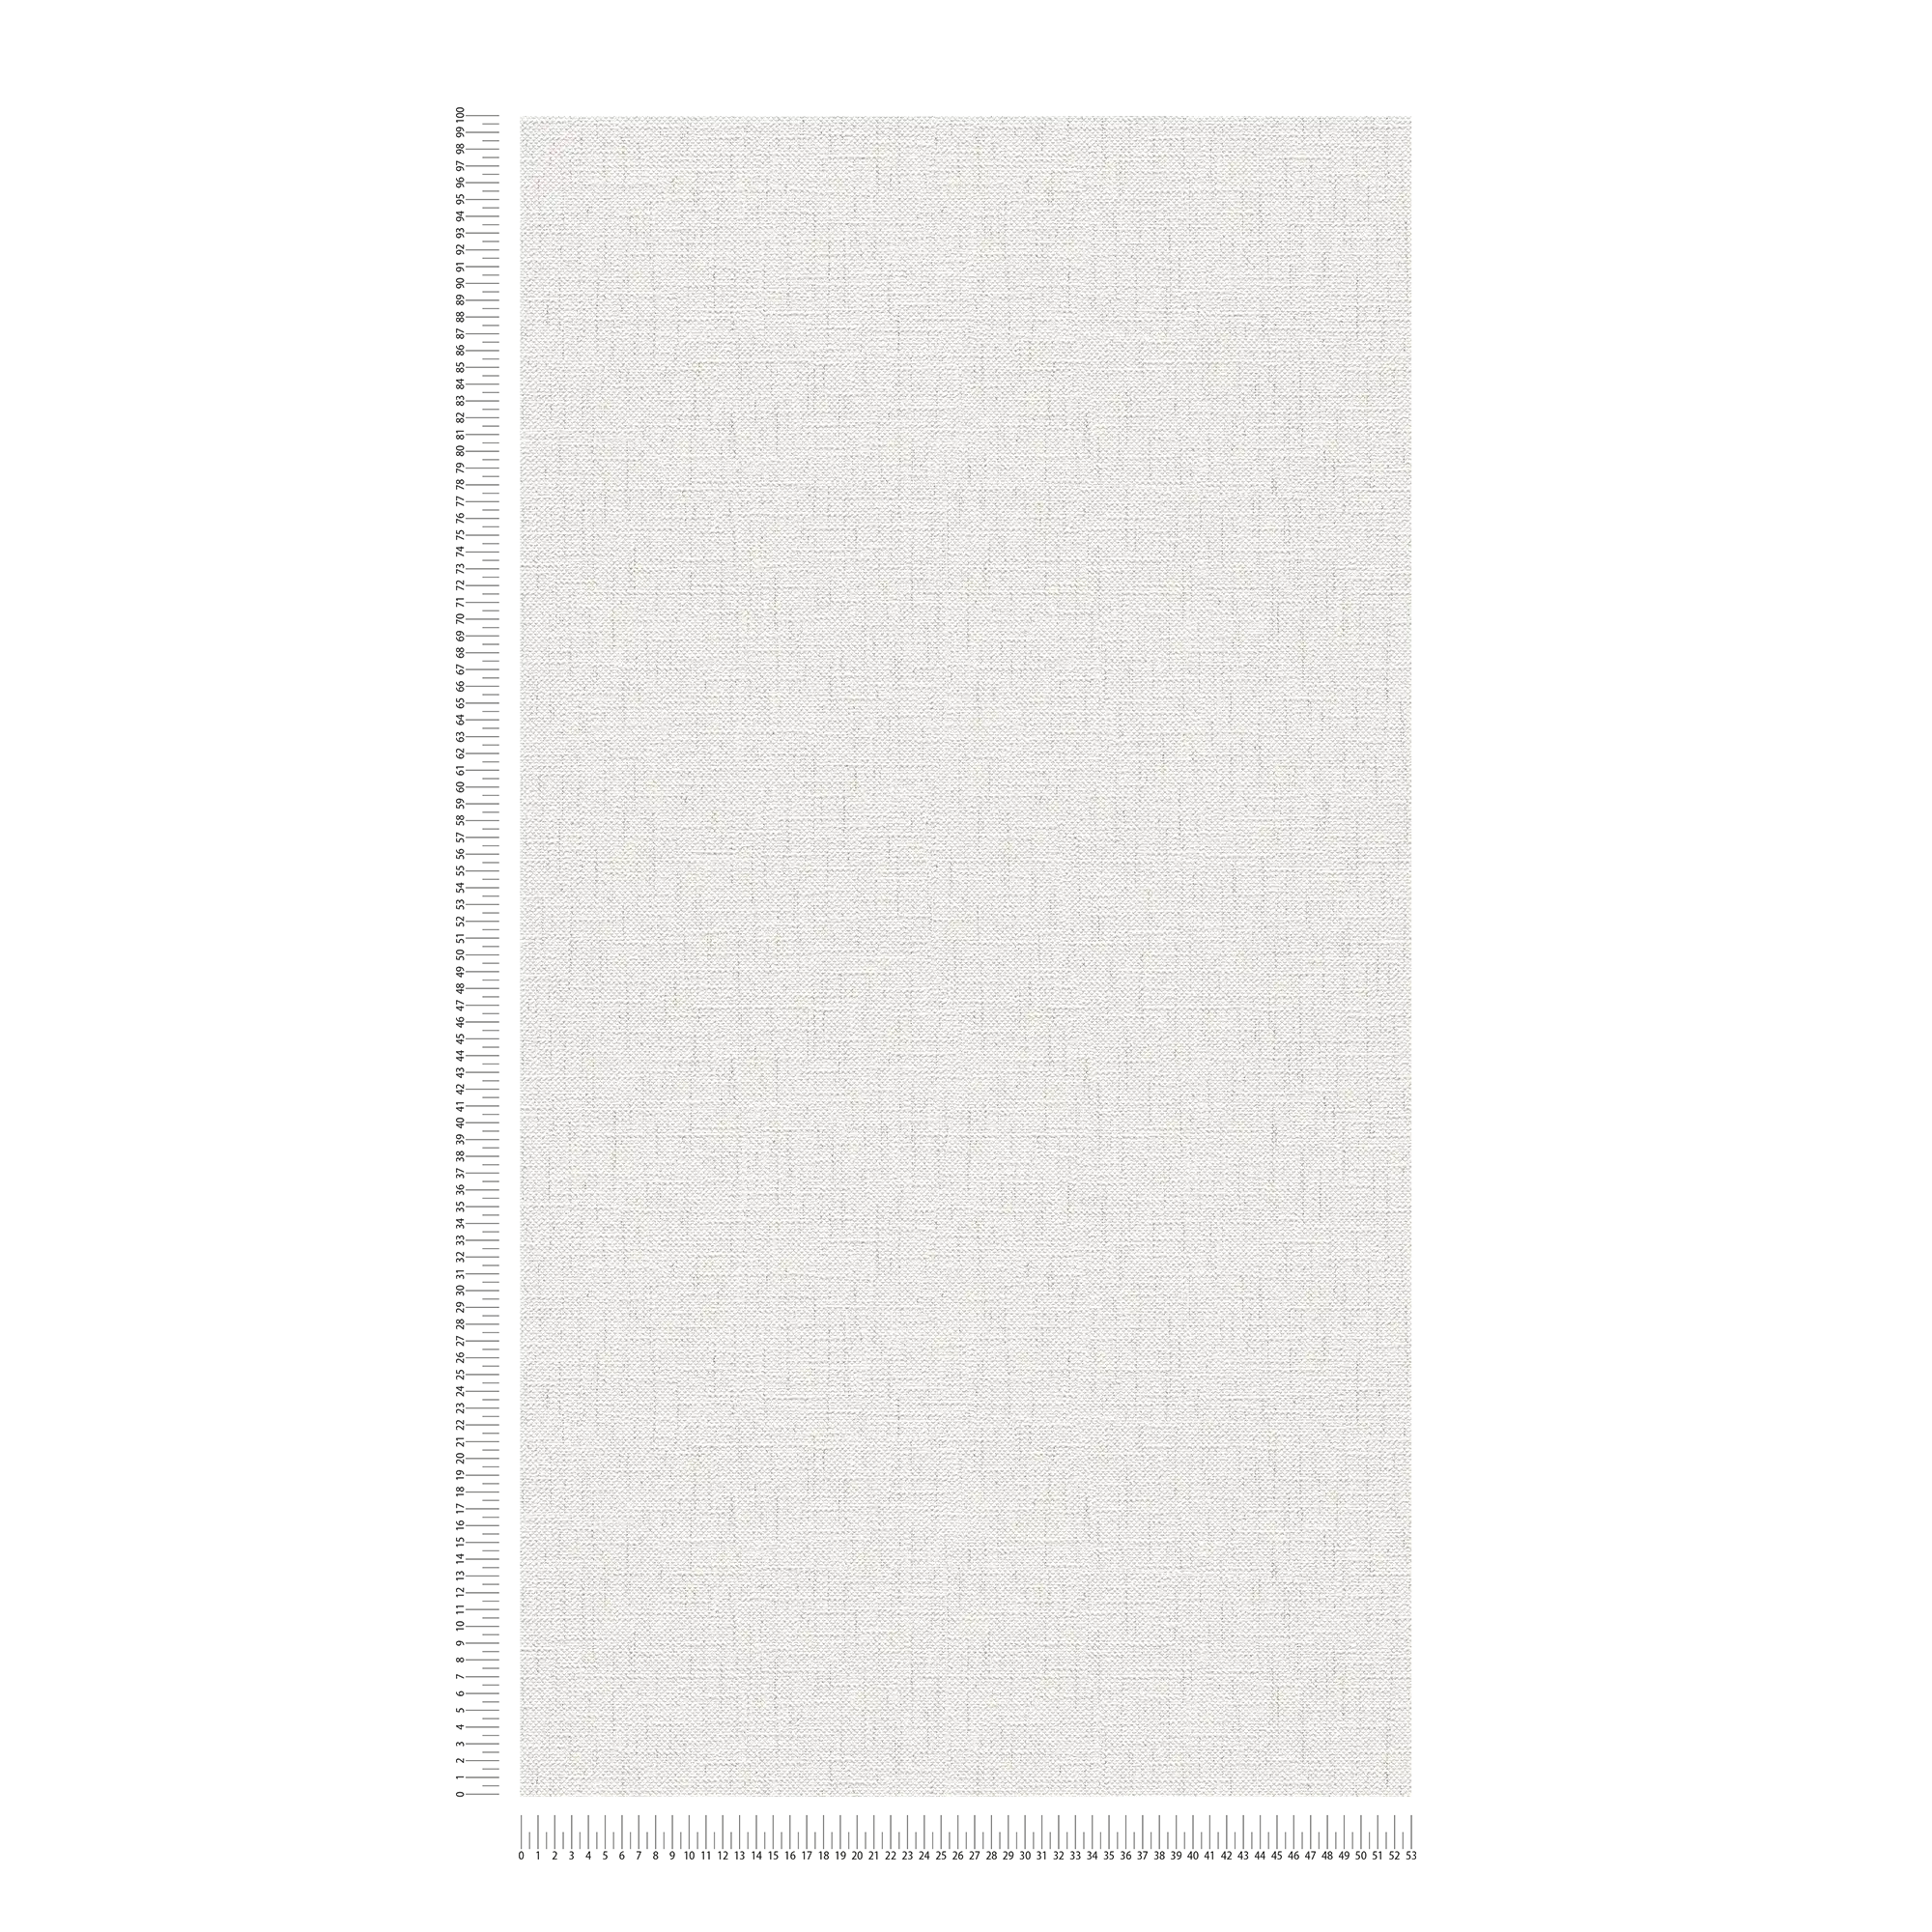             Textiloptik Papiertapete mit melierter Färbung – Grau, Weiß
        